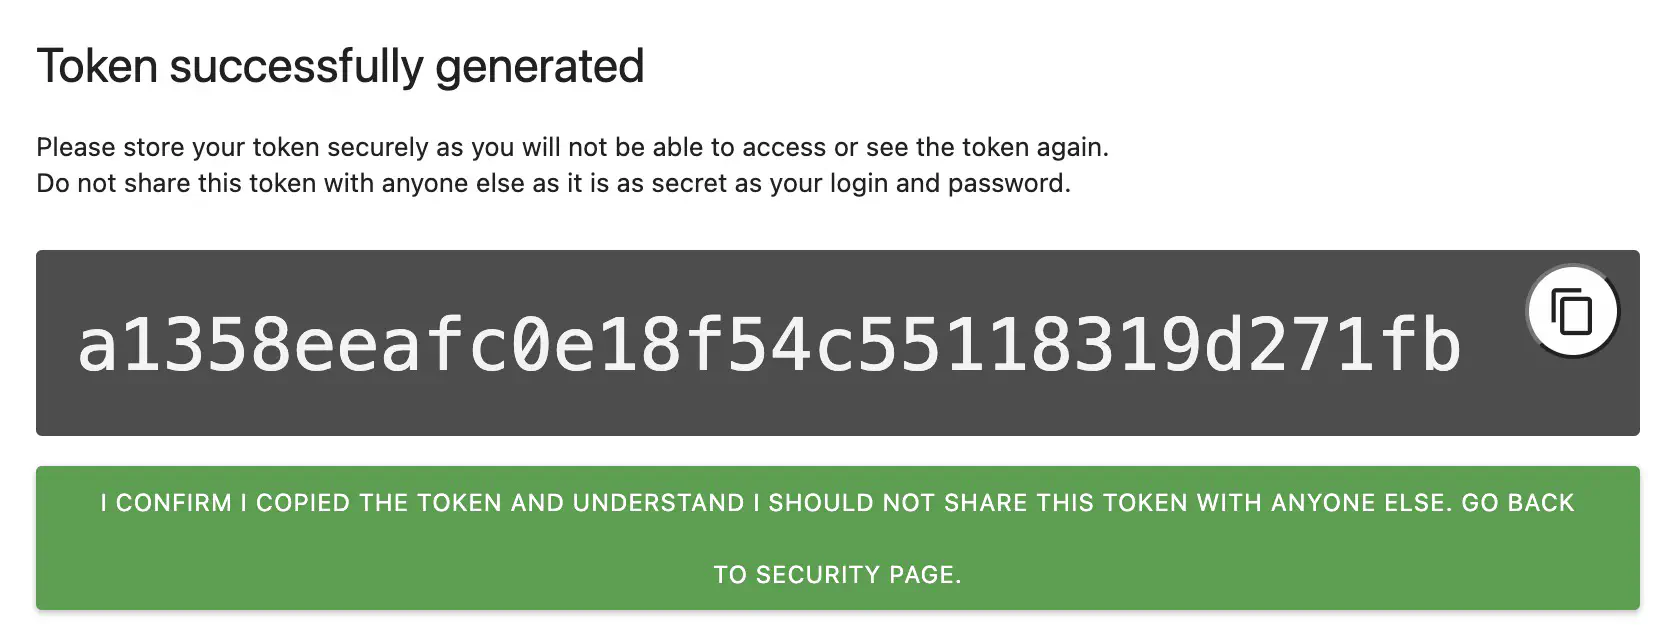 Matomo authentication token